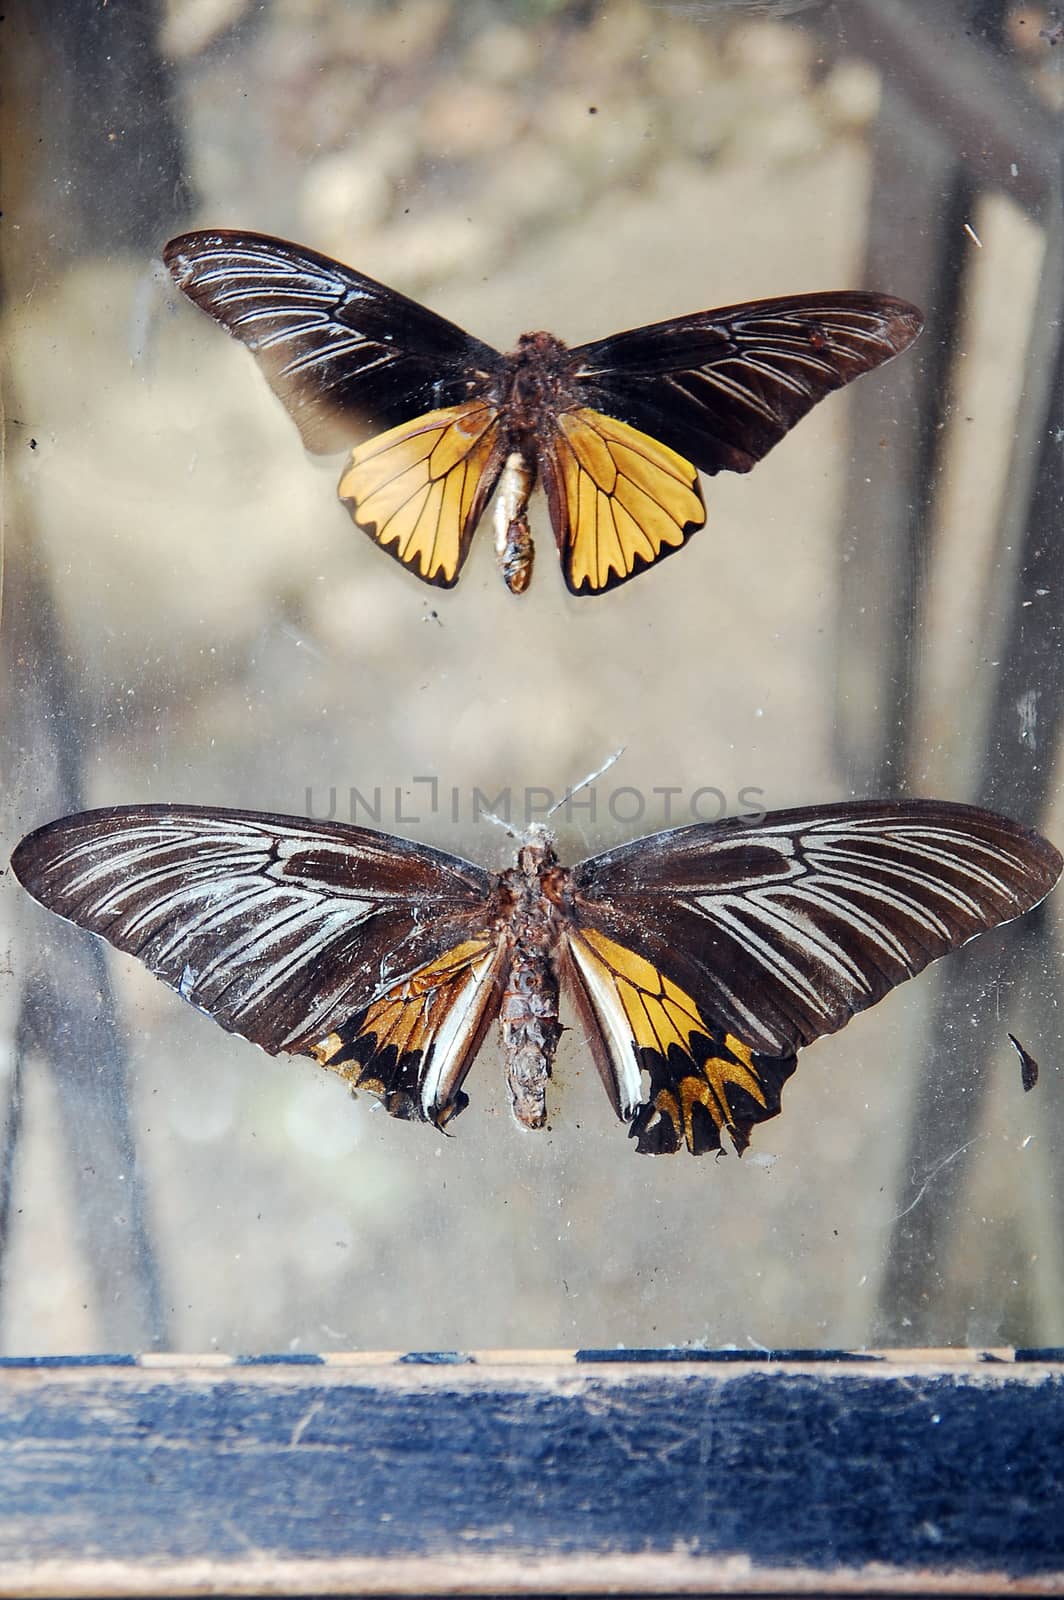 BOHOL, PH - SEPT 1 - Butterfly at Habitat Butterflies Conservation Center on September 1, 2015 in Bohol, Philippines